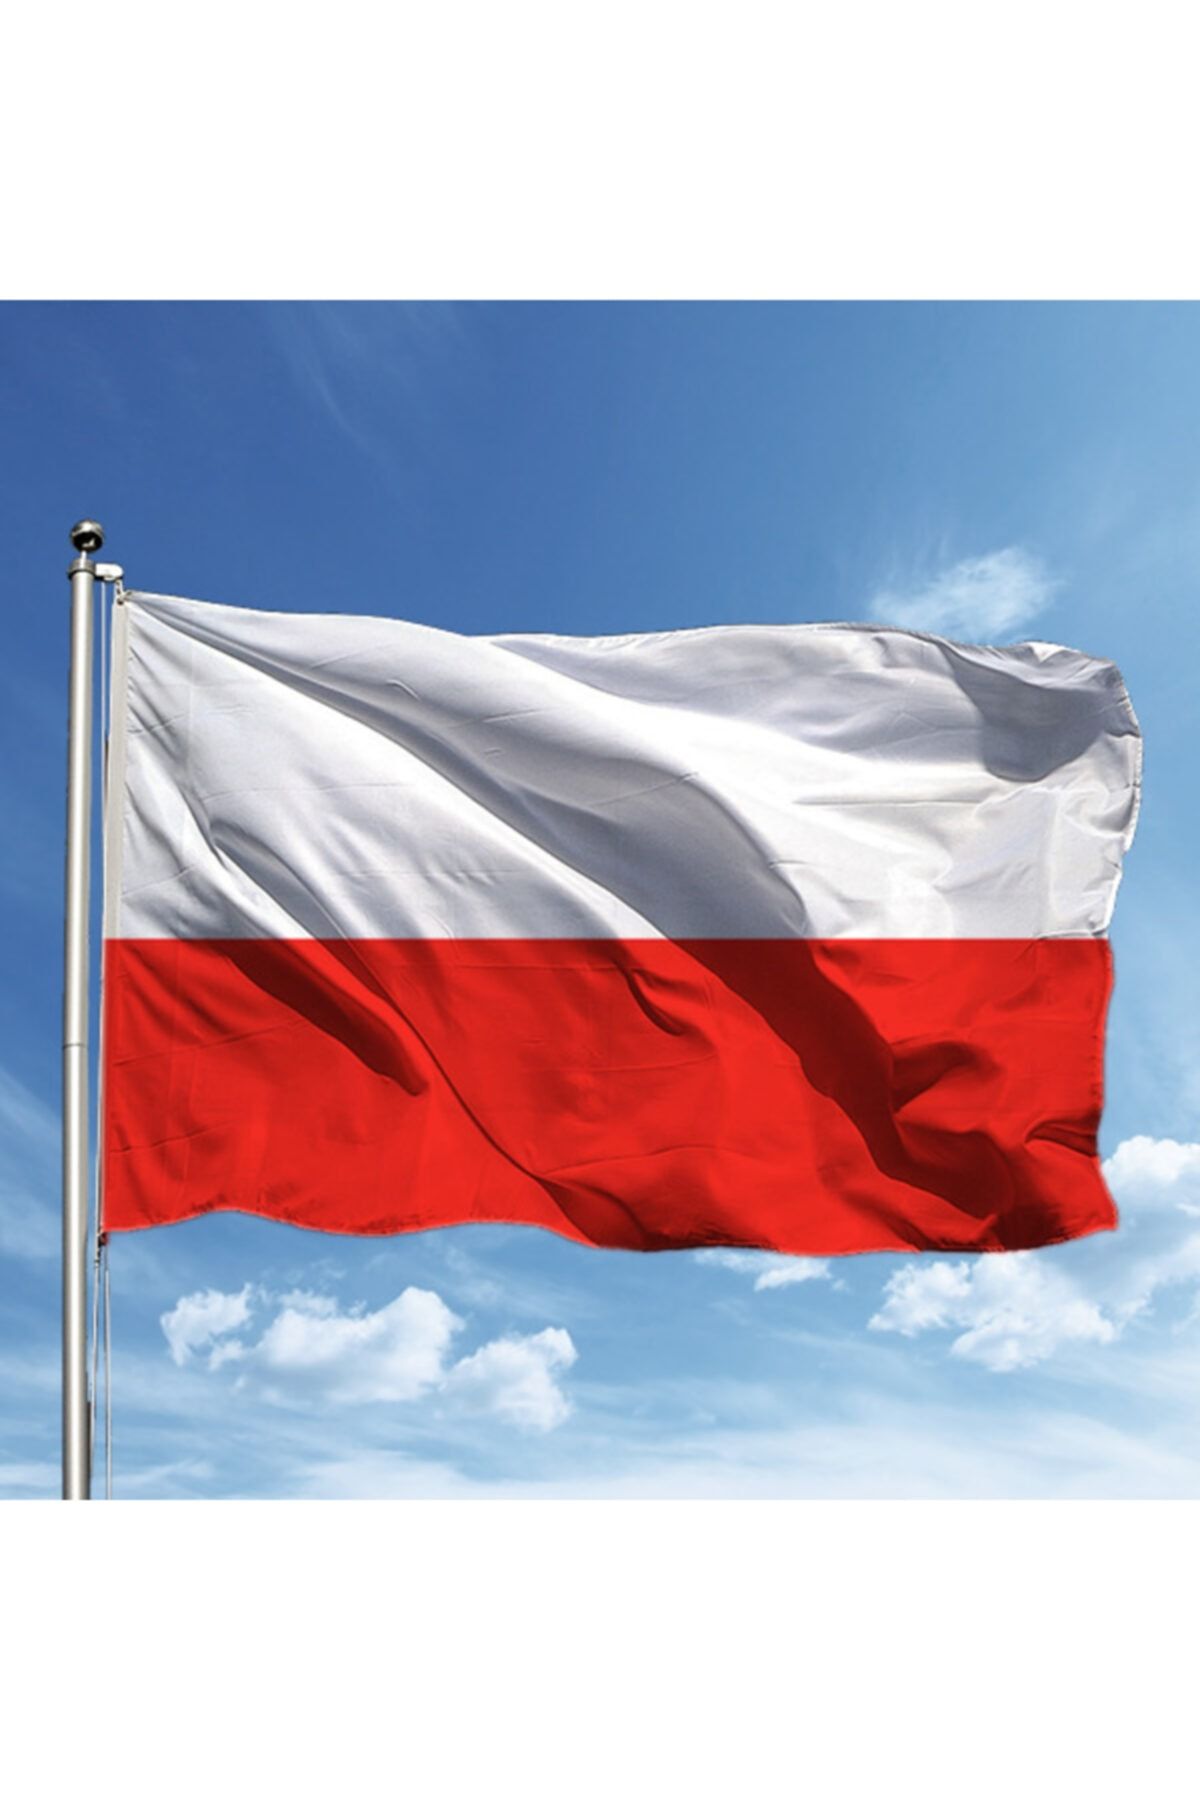 Özgüvenal Polonya Bayrağı 100*150 Cm